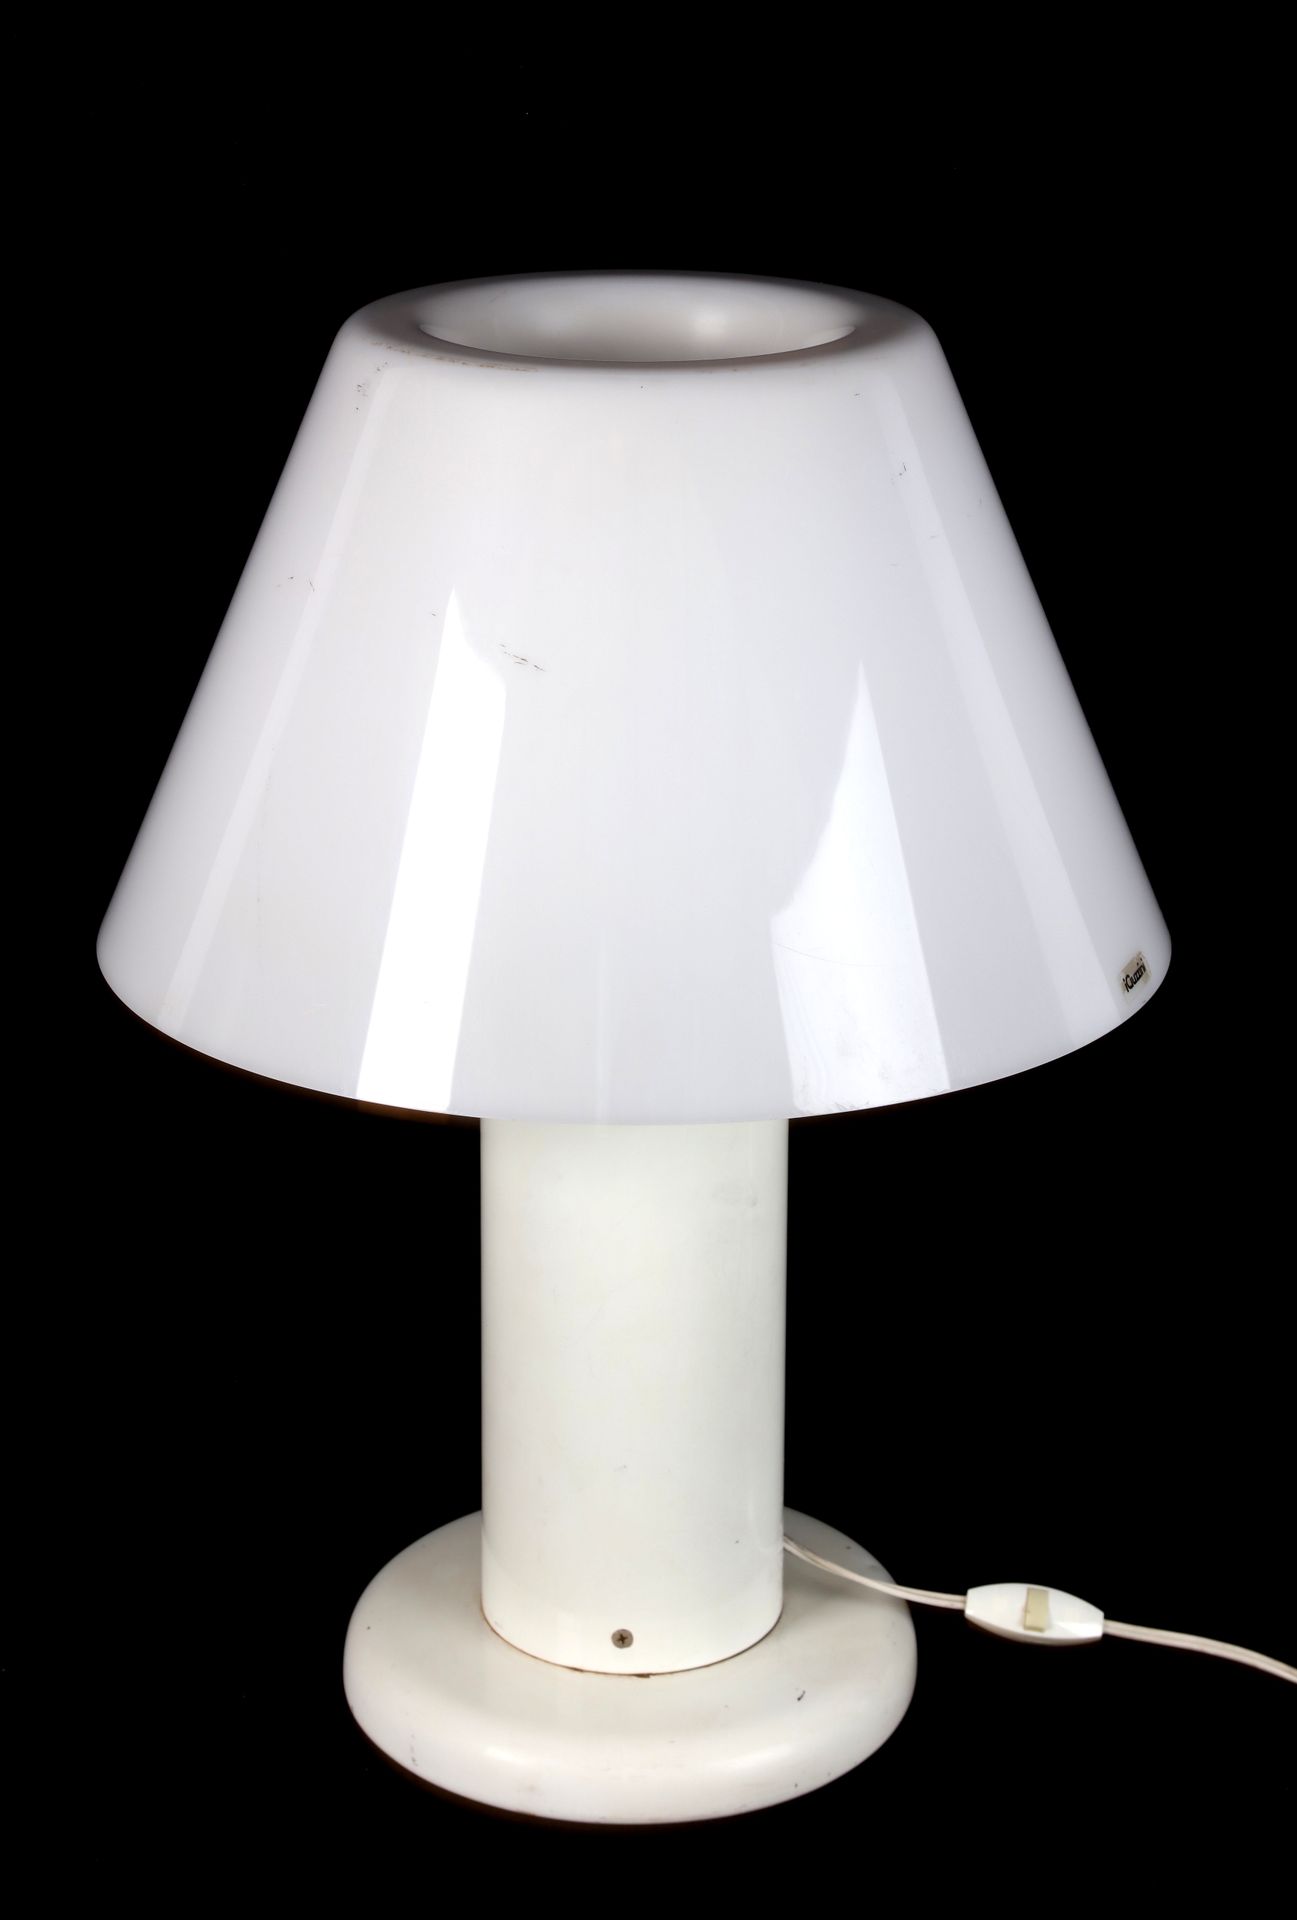 Null IGUZZINI (出版商), 台灯，白色漆面金属圆形底座上的管状轴，上面有一个乳白色的甲基丙烯酸酯的圆锥形灯罩。高57厘米